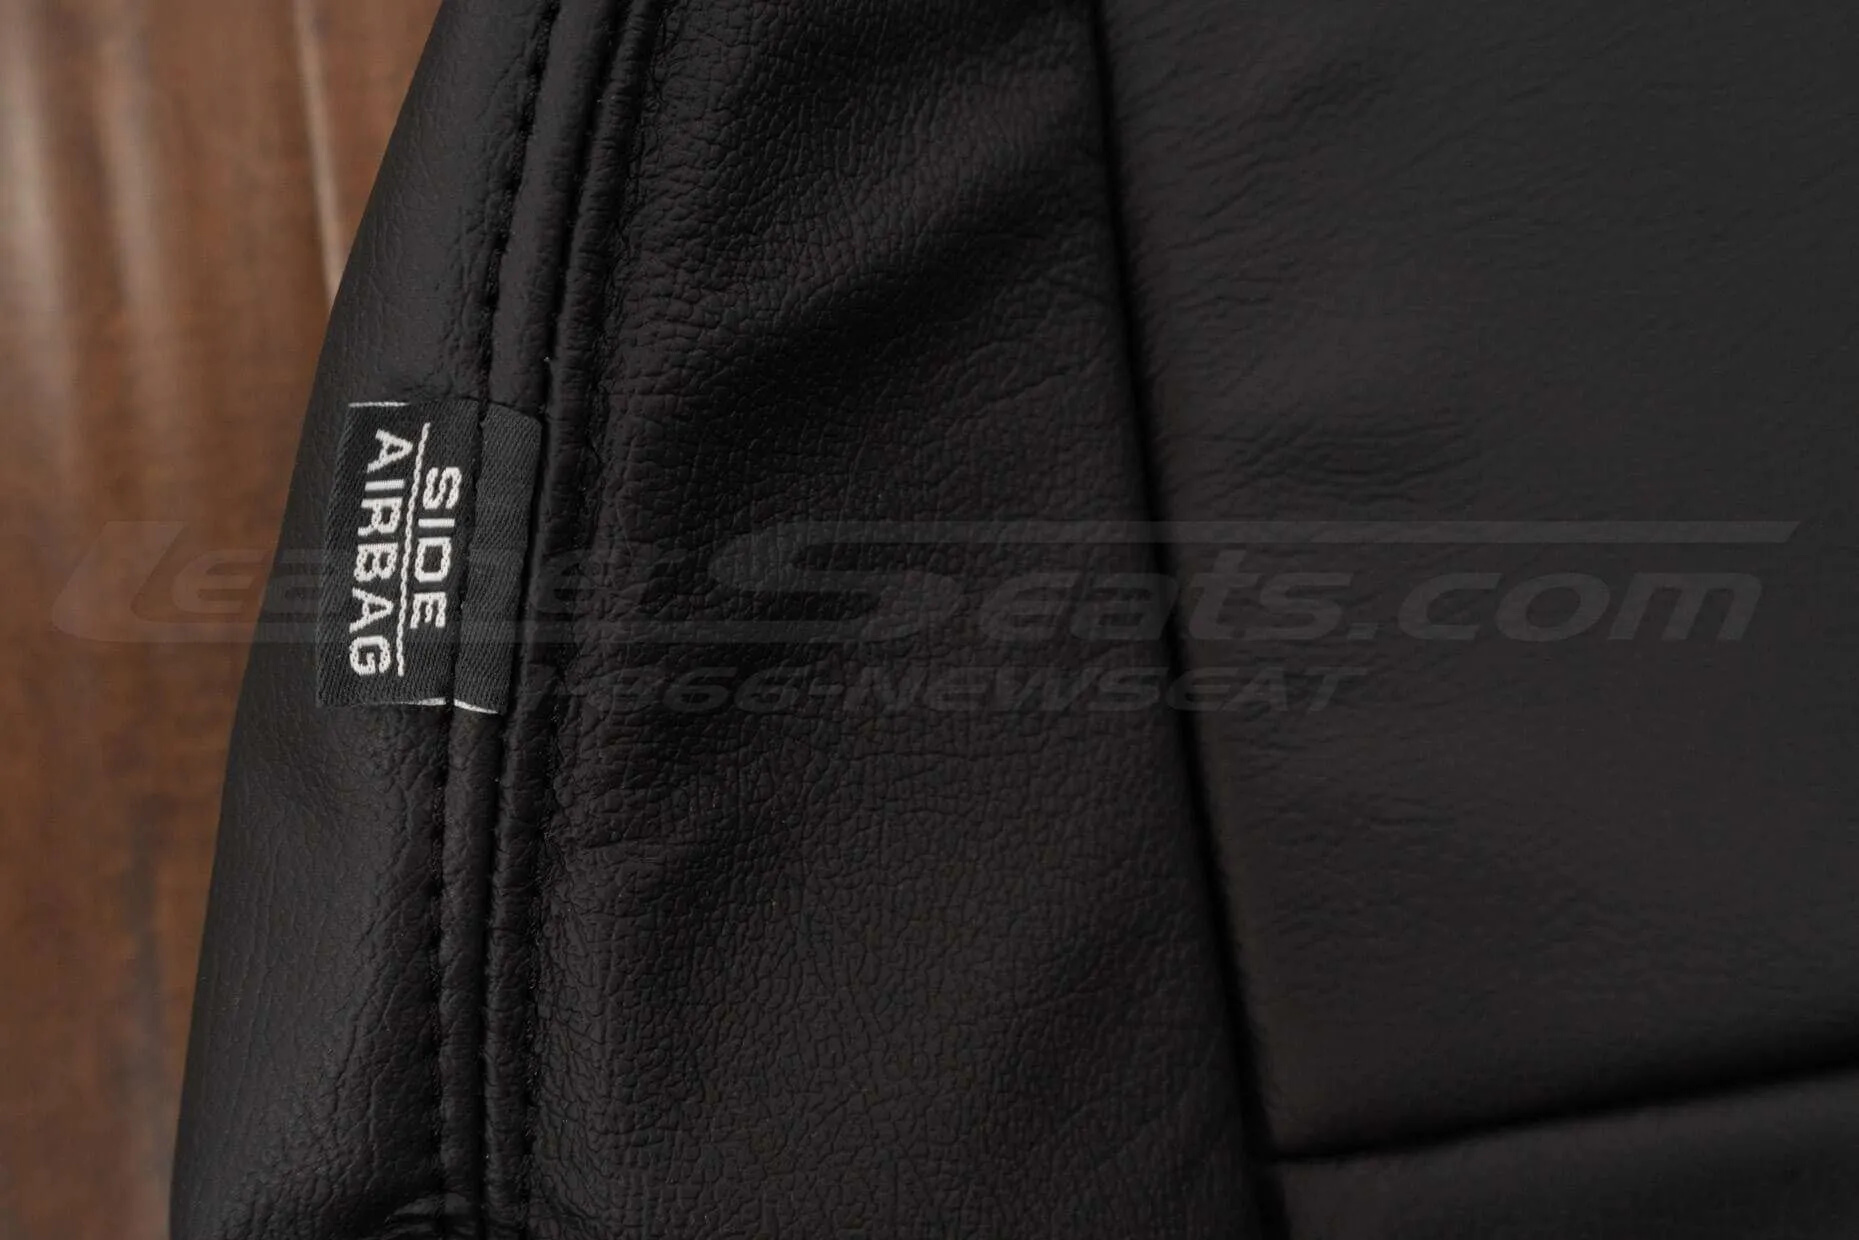 Side Airbag tag on backrest upholstery